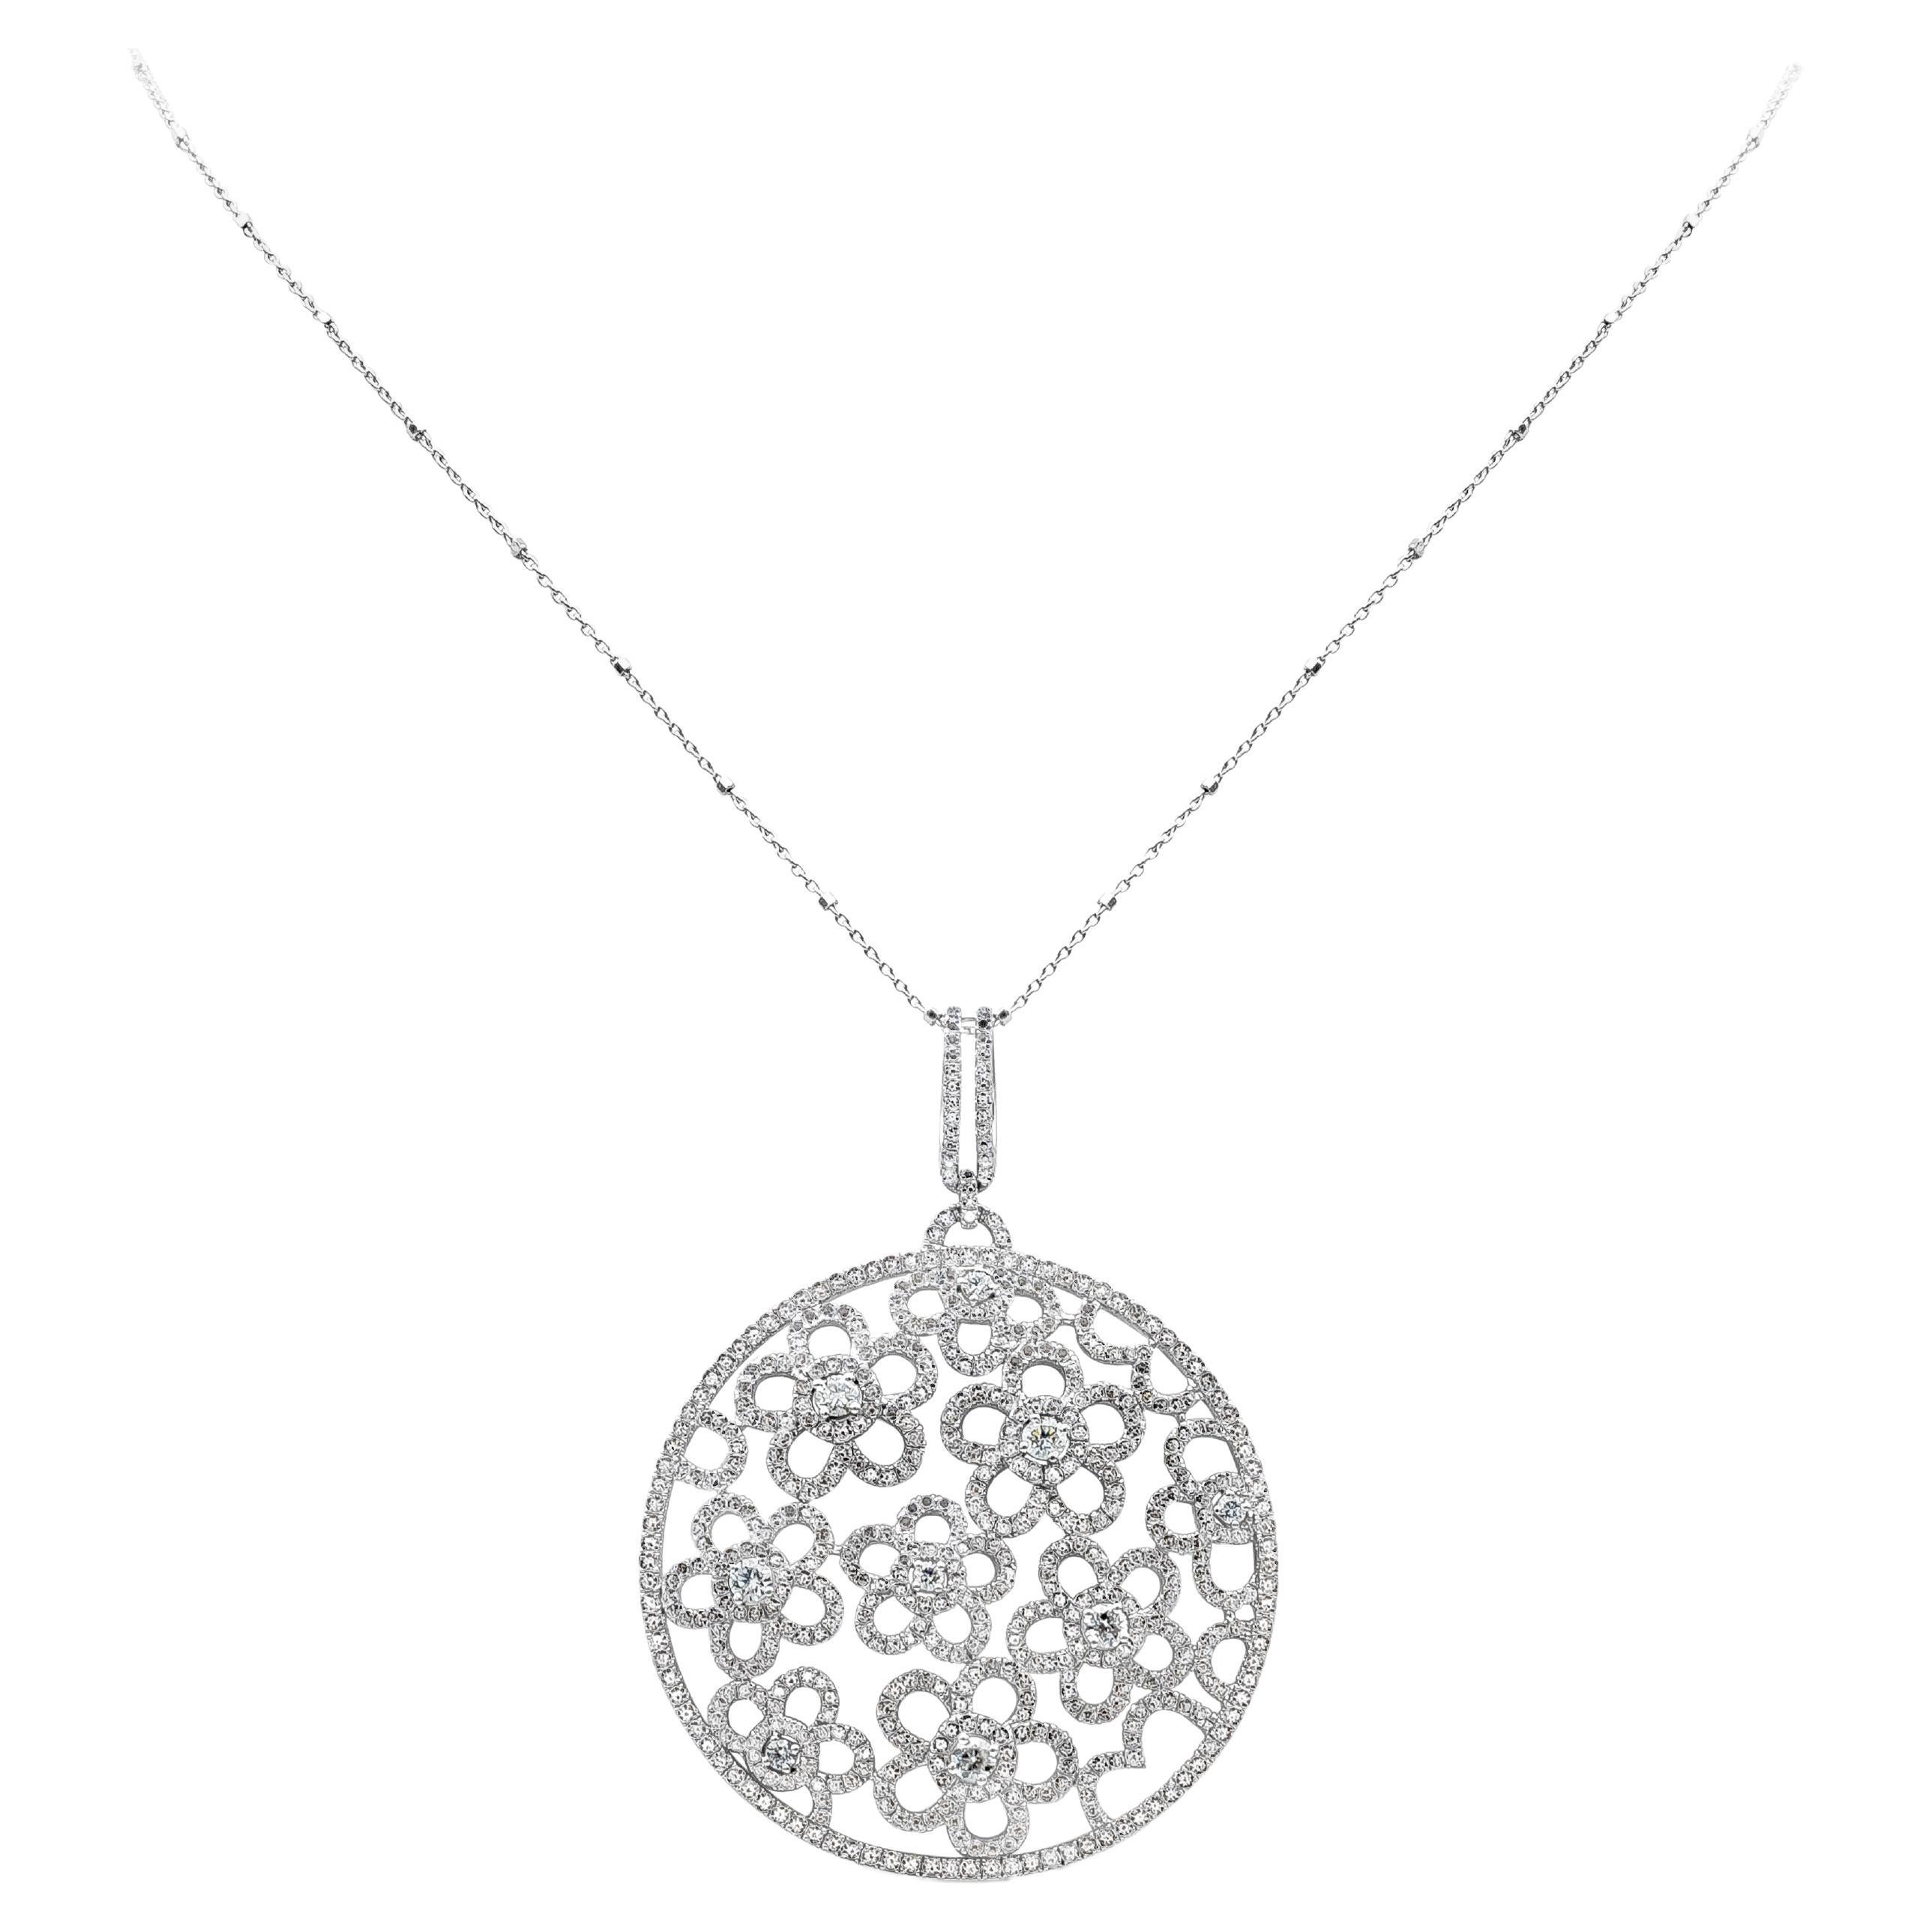 Roman Malakov, collier pendentif « O » en diamants ronds brillants de 3,92 carats au total